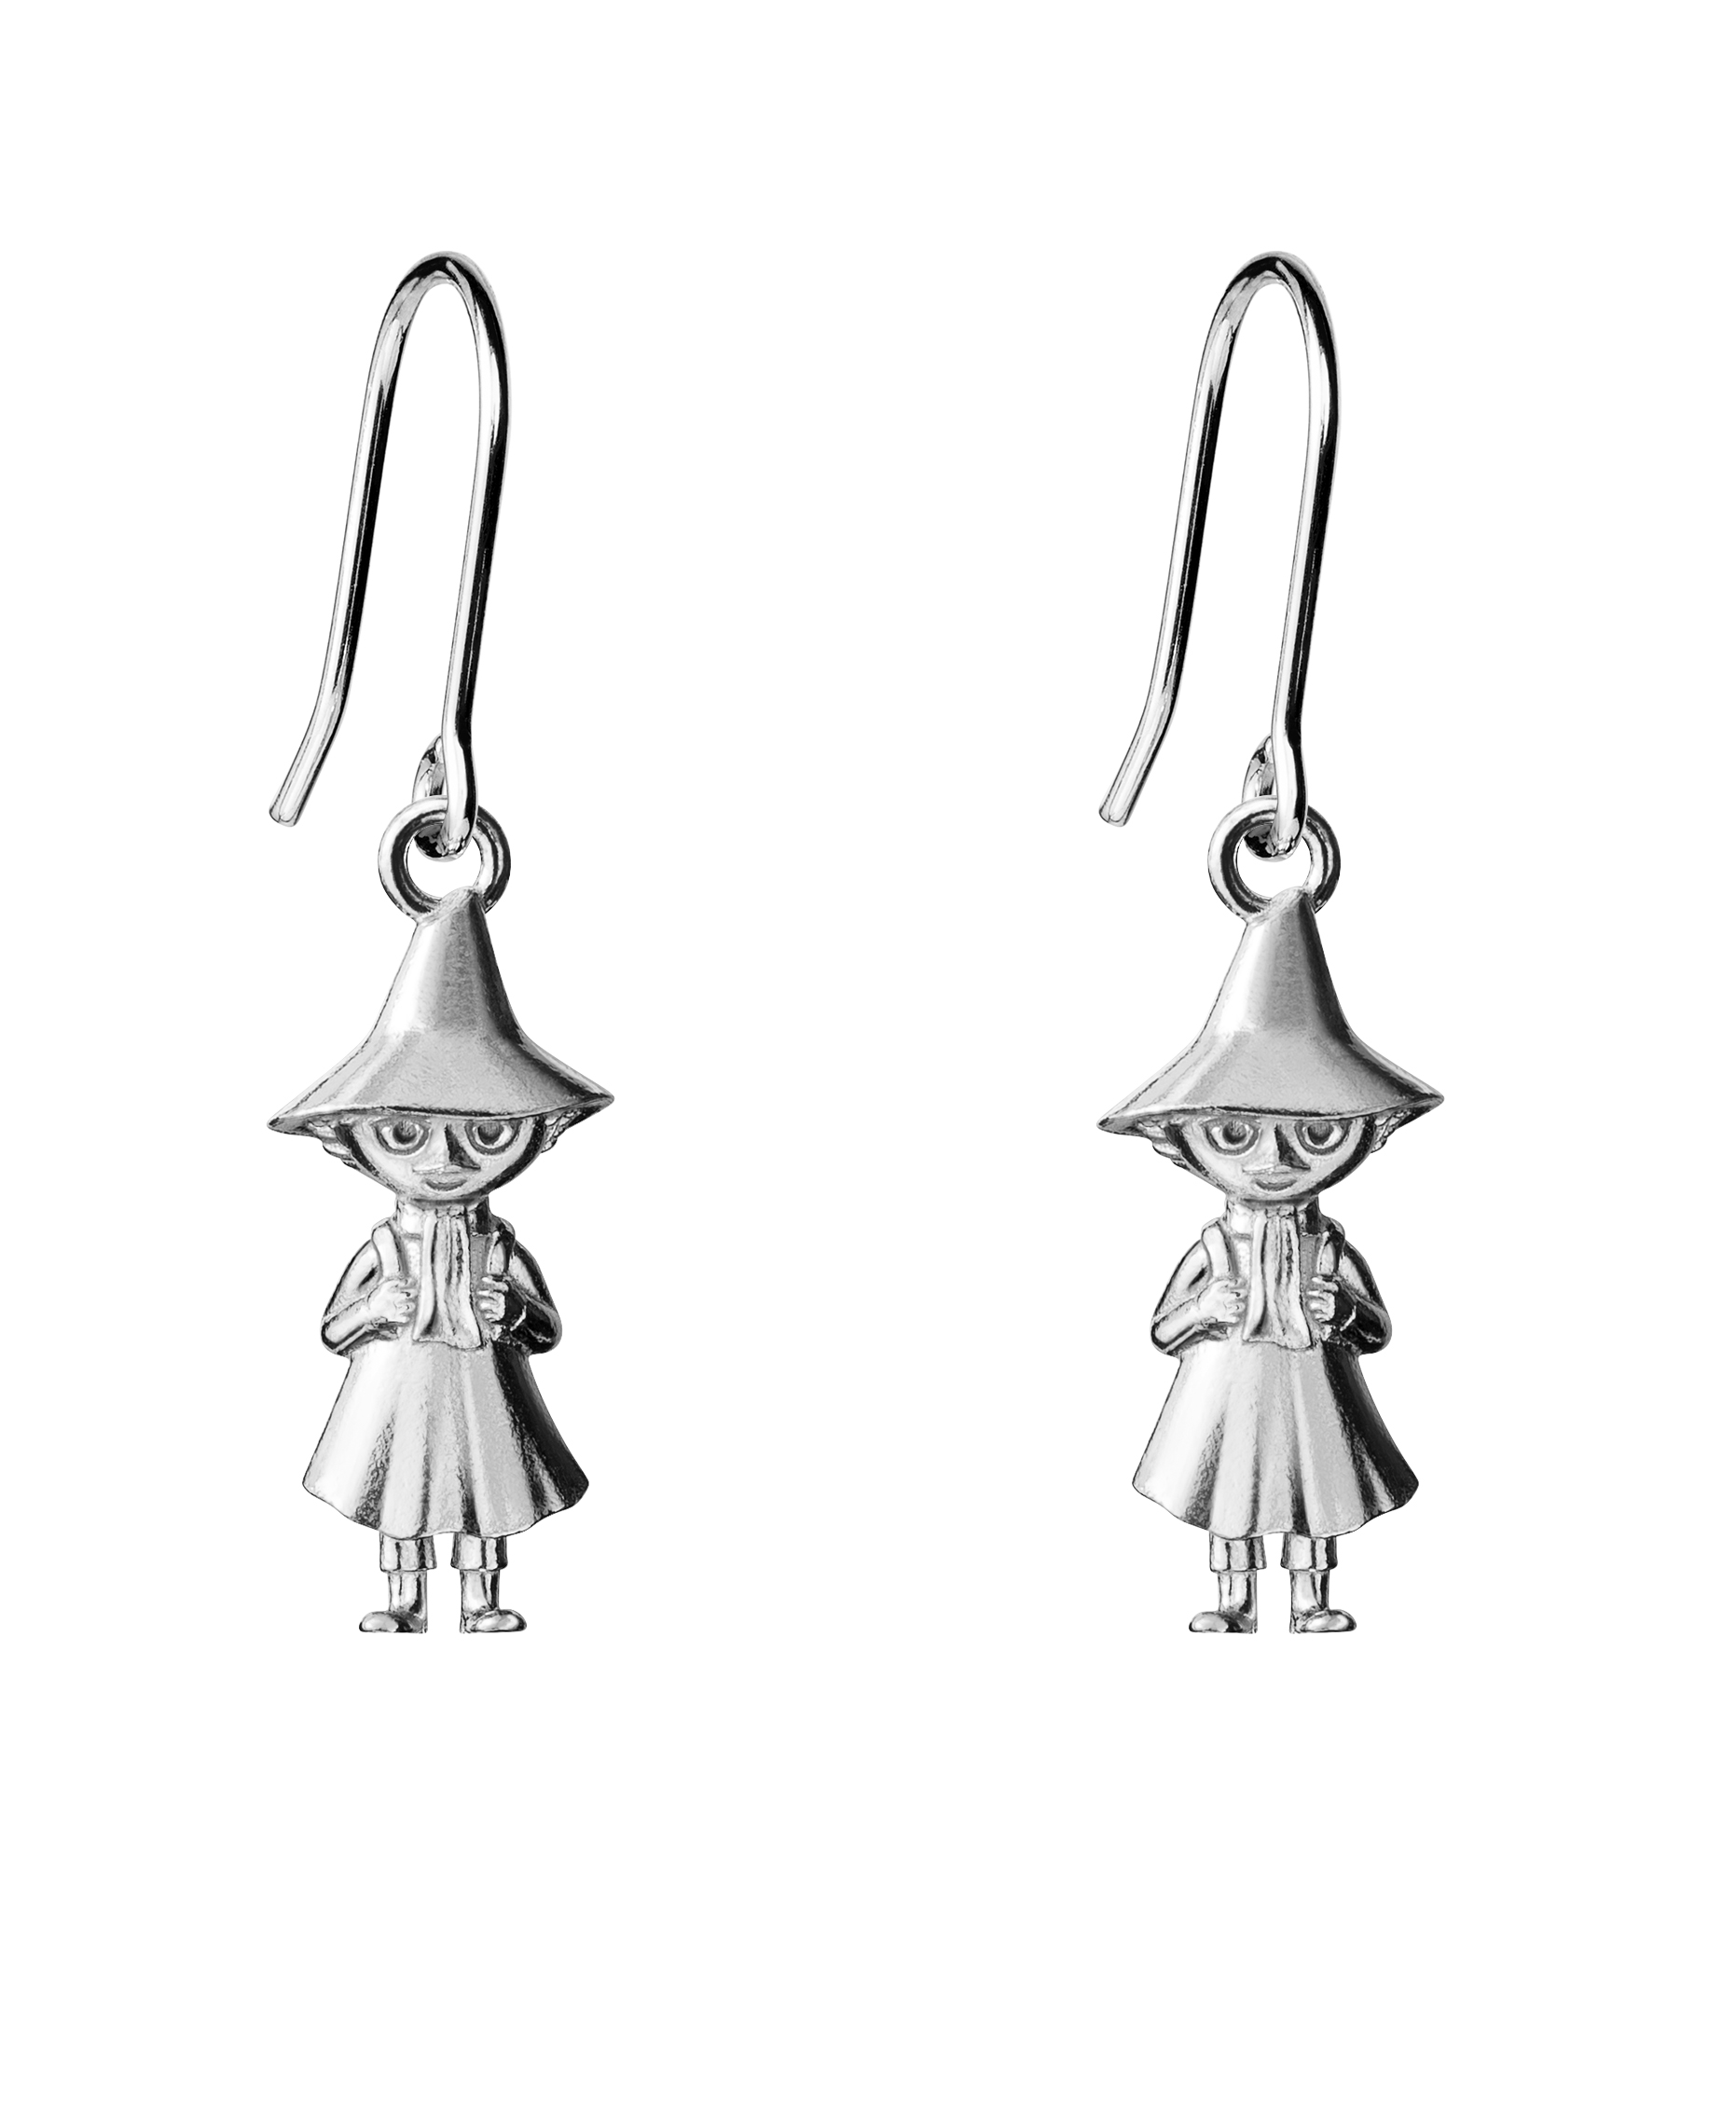 Saurum Snufkin silver earrings